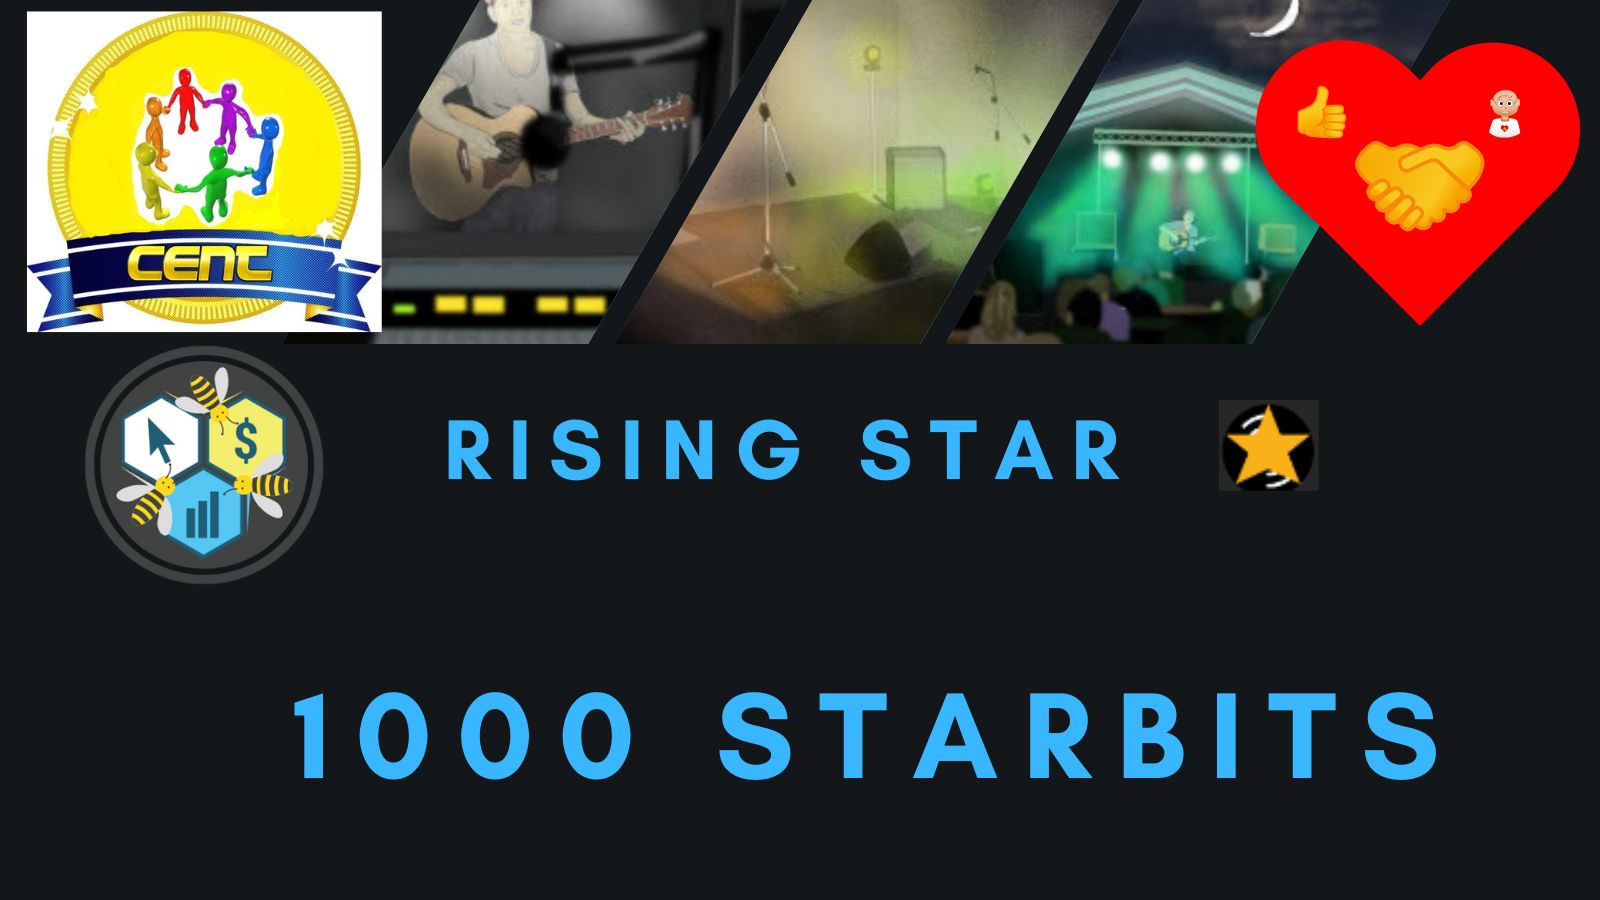 @mypathtofire2/risingstar-fire-1000-starbits-prize-4a9cf03b1c907